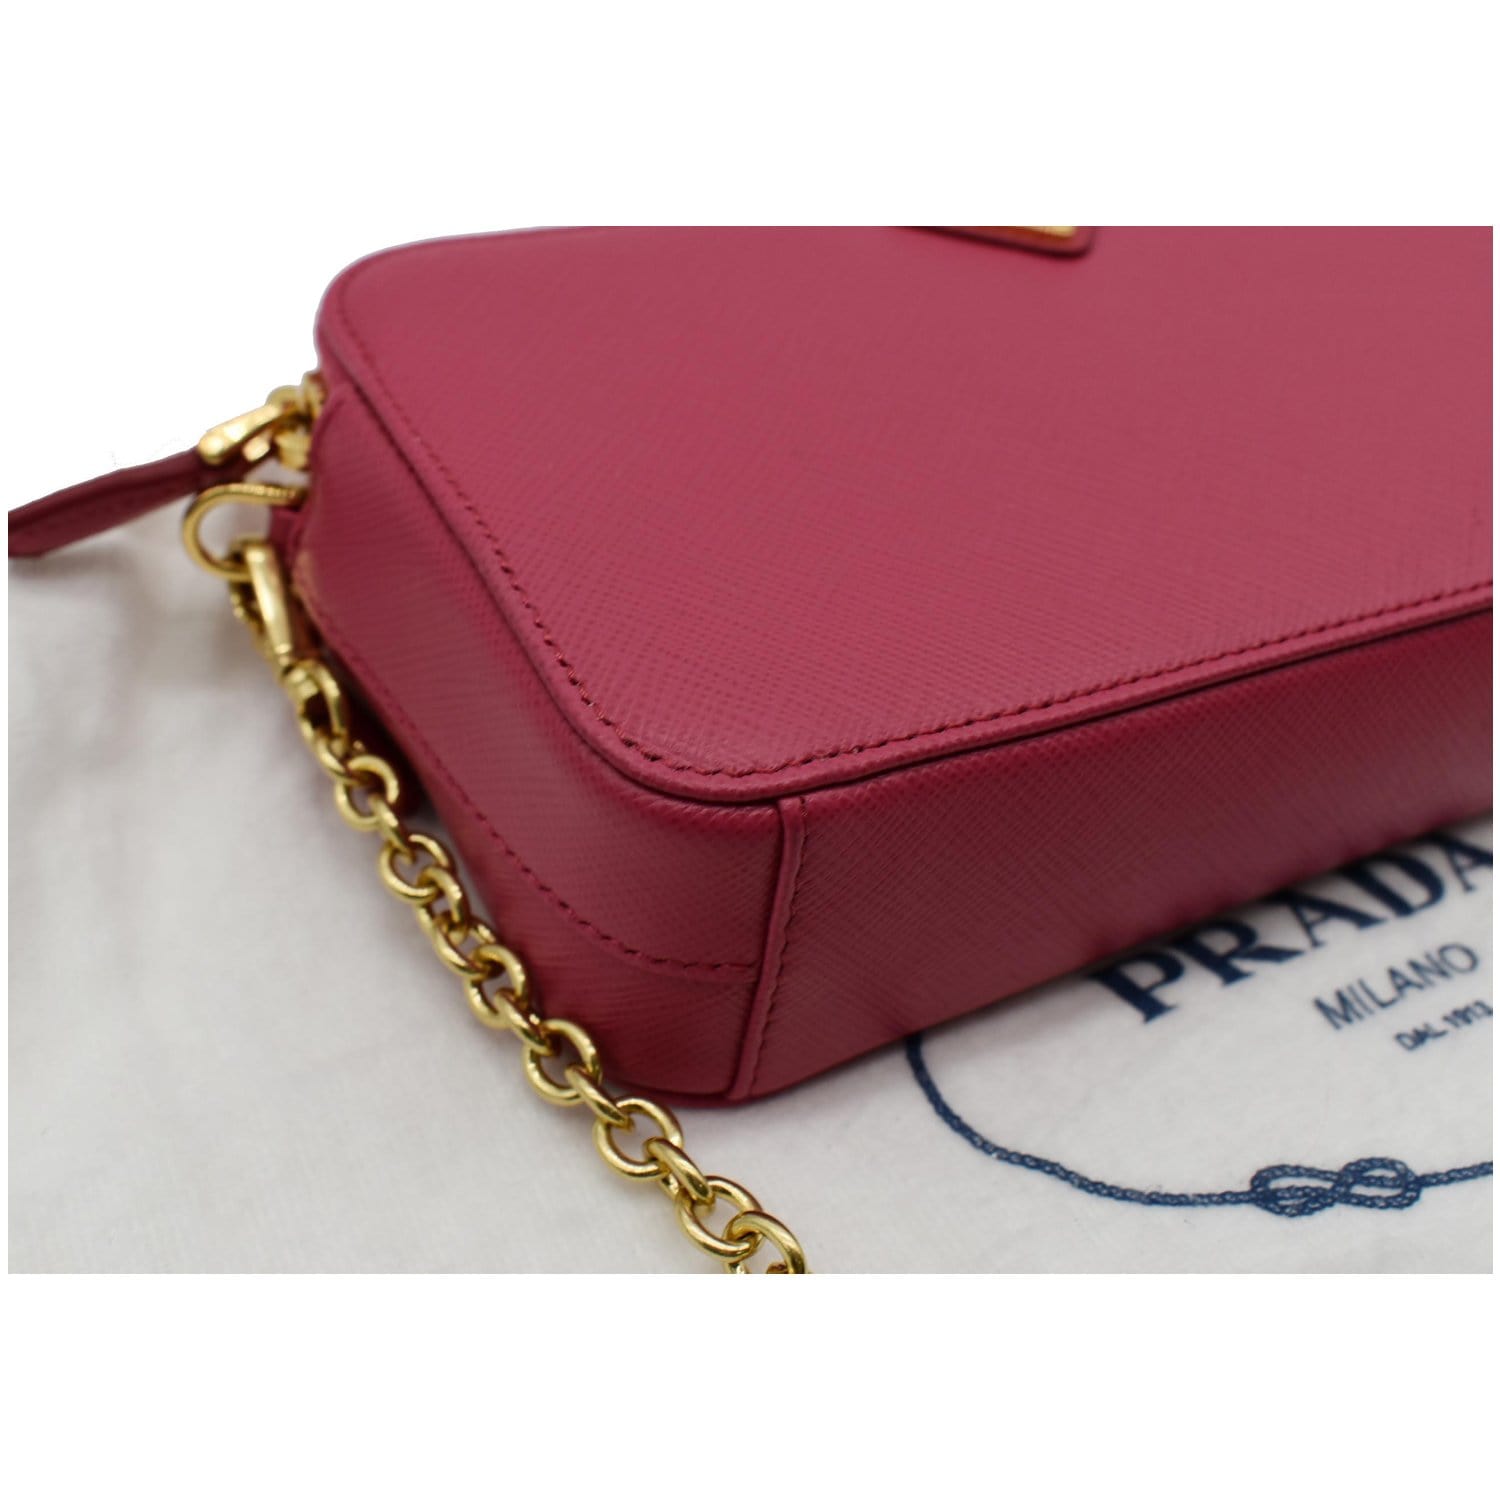 Prada Pattina Saffiano Leather Mini Bag Pink